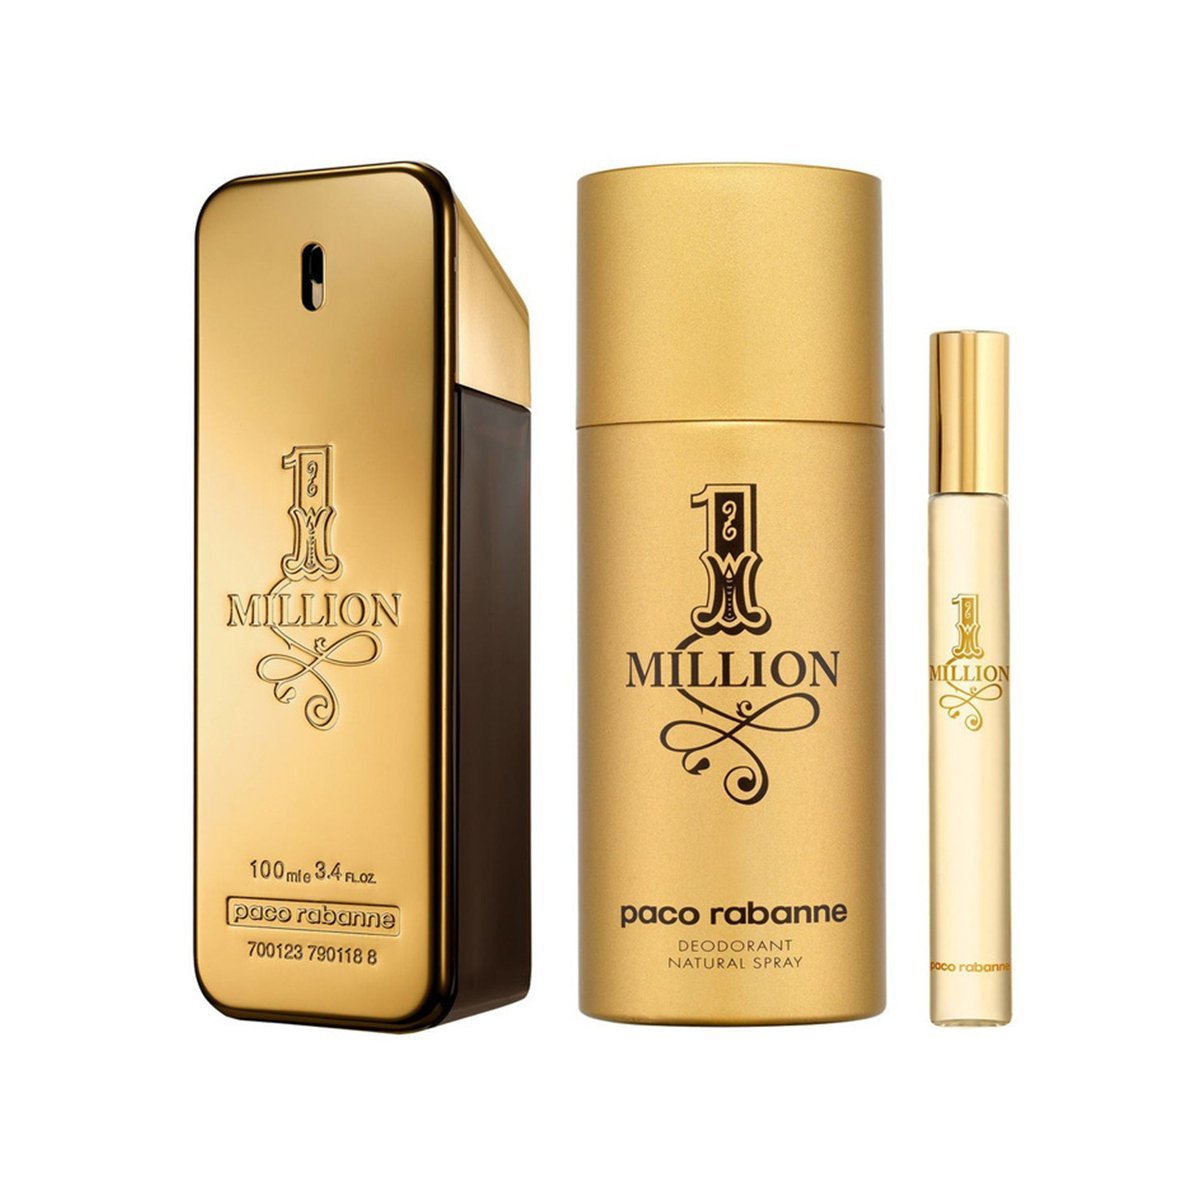 Paco Rabanne 1 Million 3-Piece Gift Set For Men - My Perfume Shop Australia